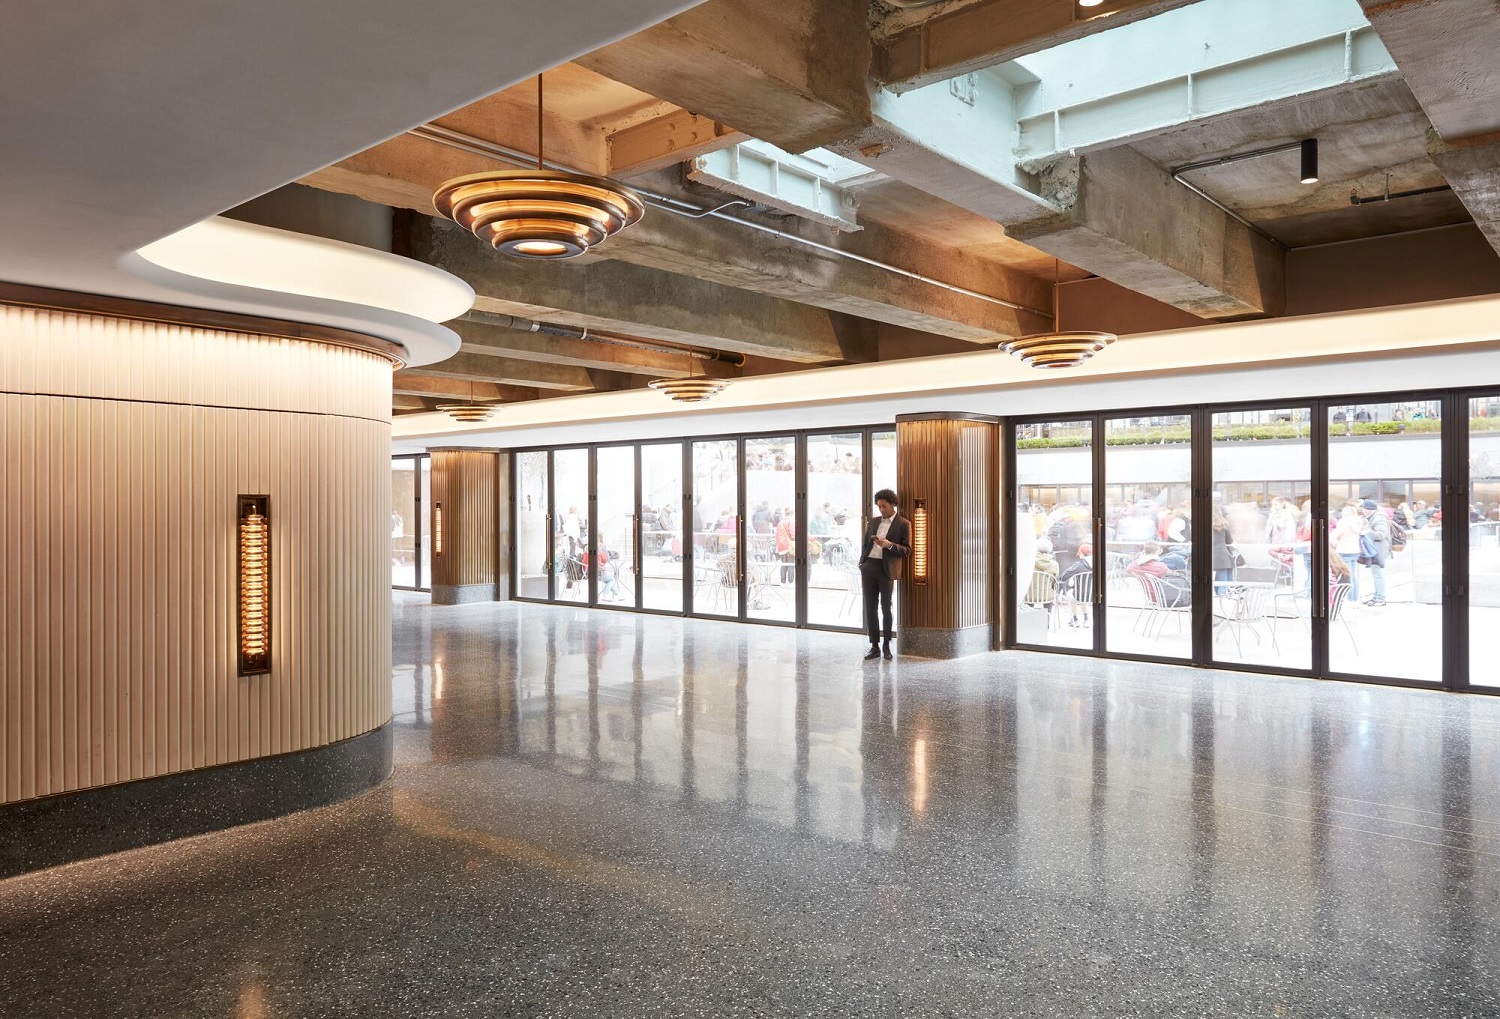 Interior of Rink Level Renovation at Rockefeller Center